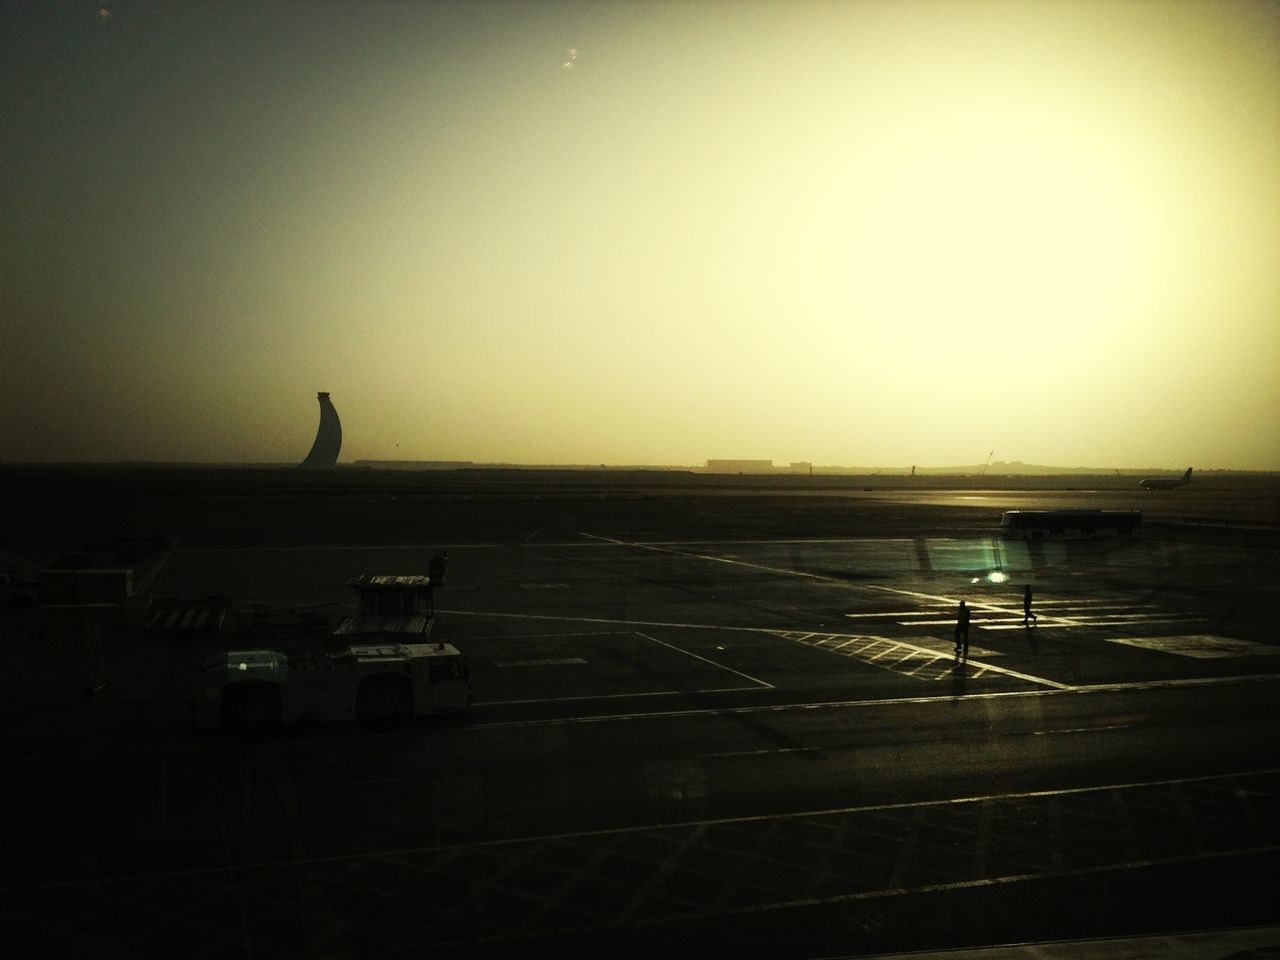 Abu Dhabi international airport